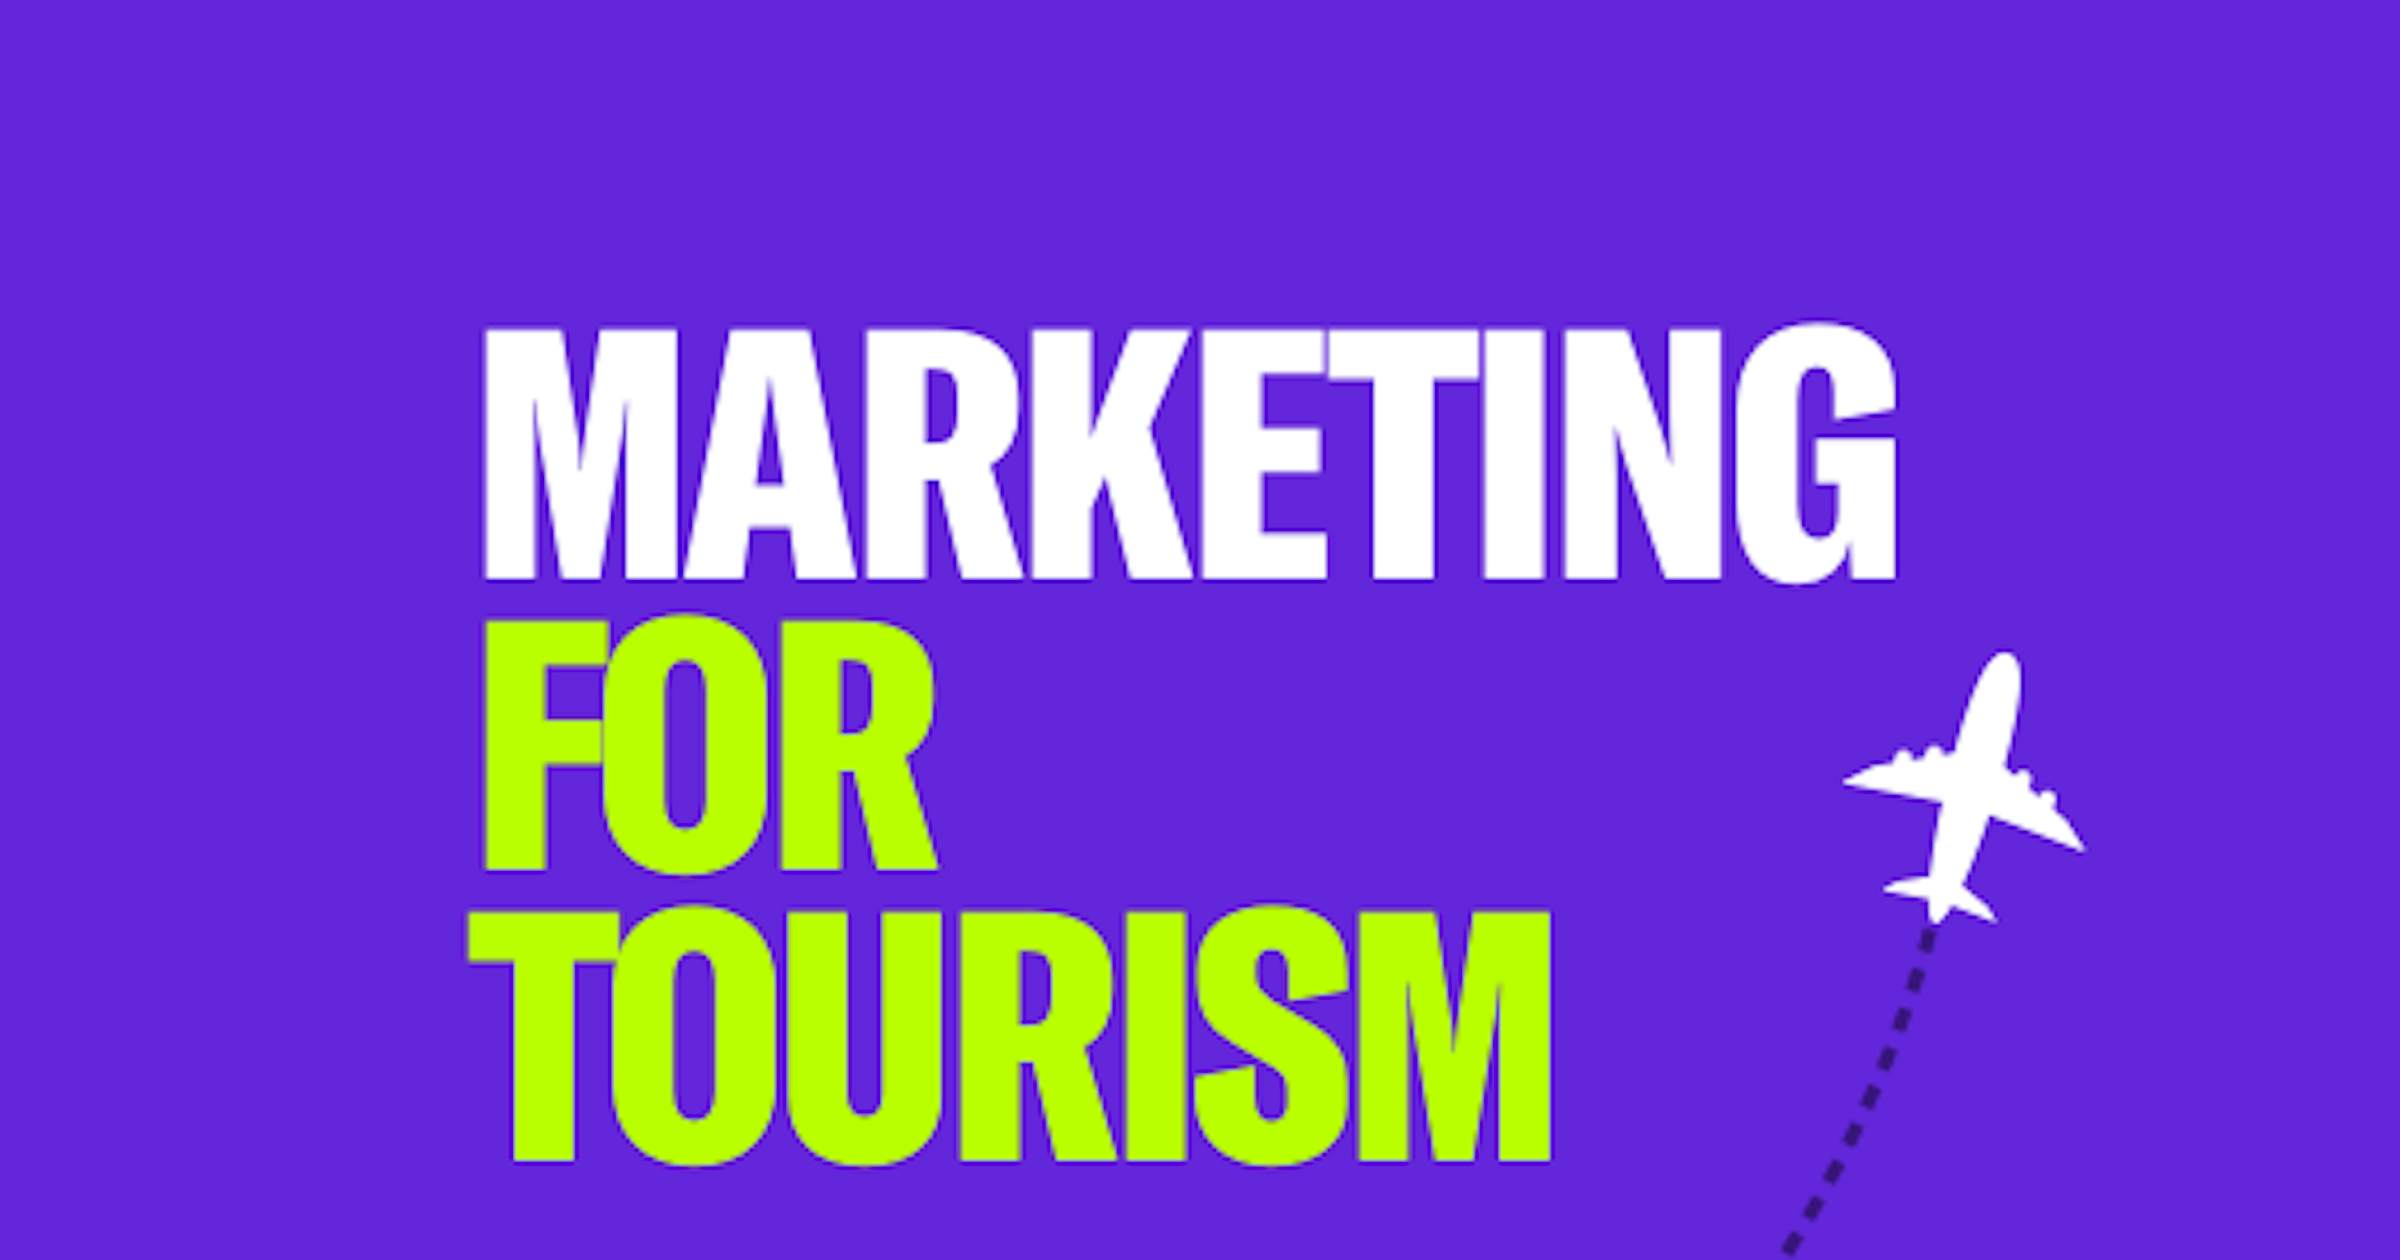 marketing jobs for tourism